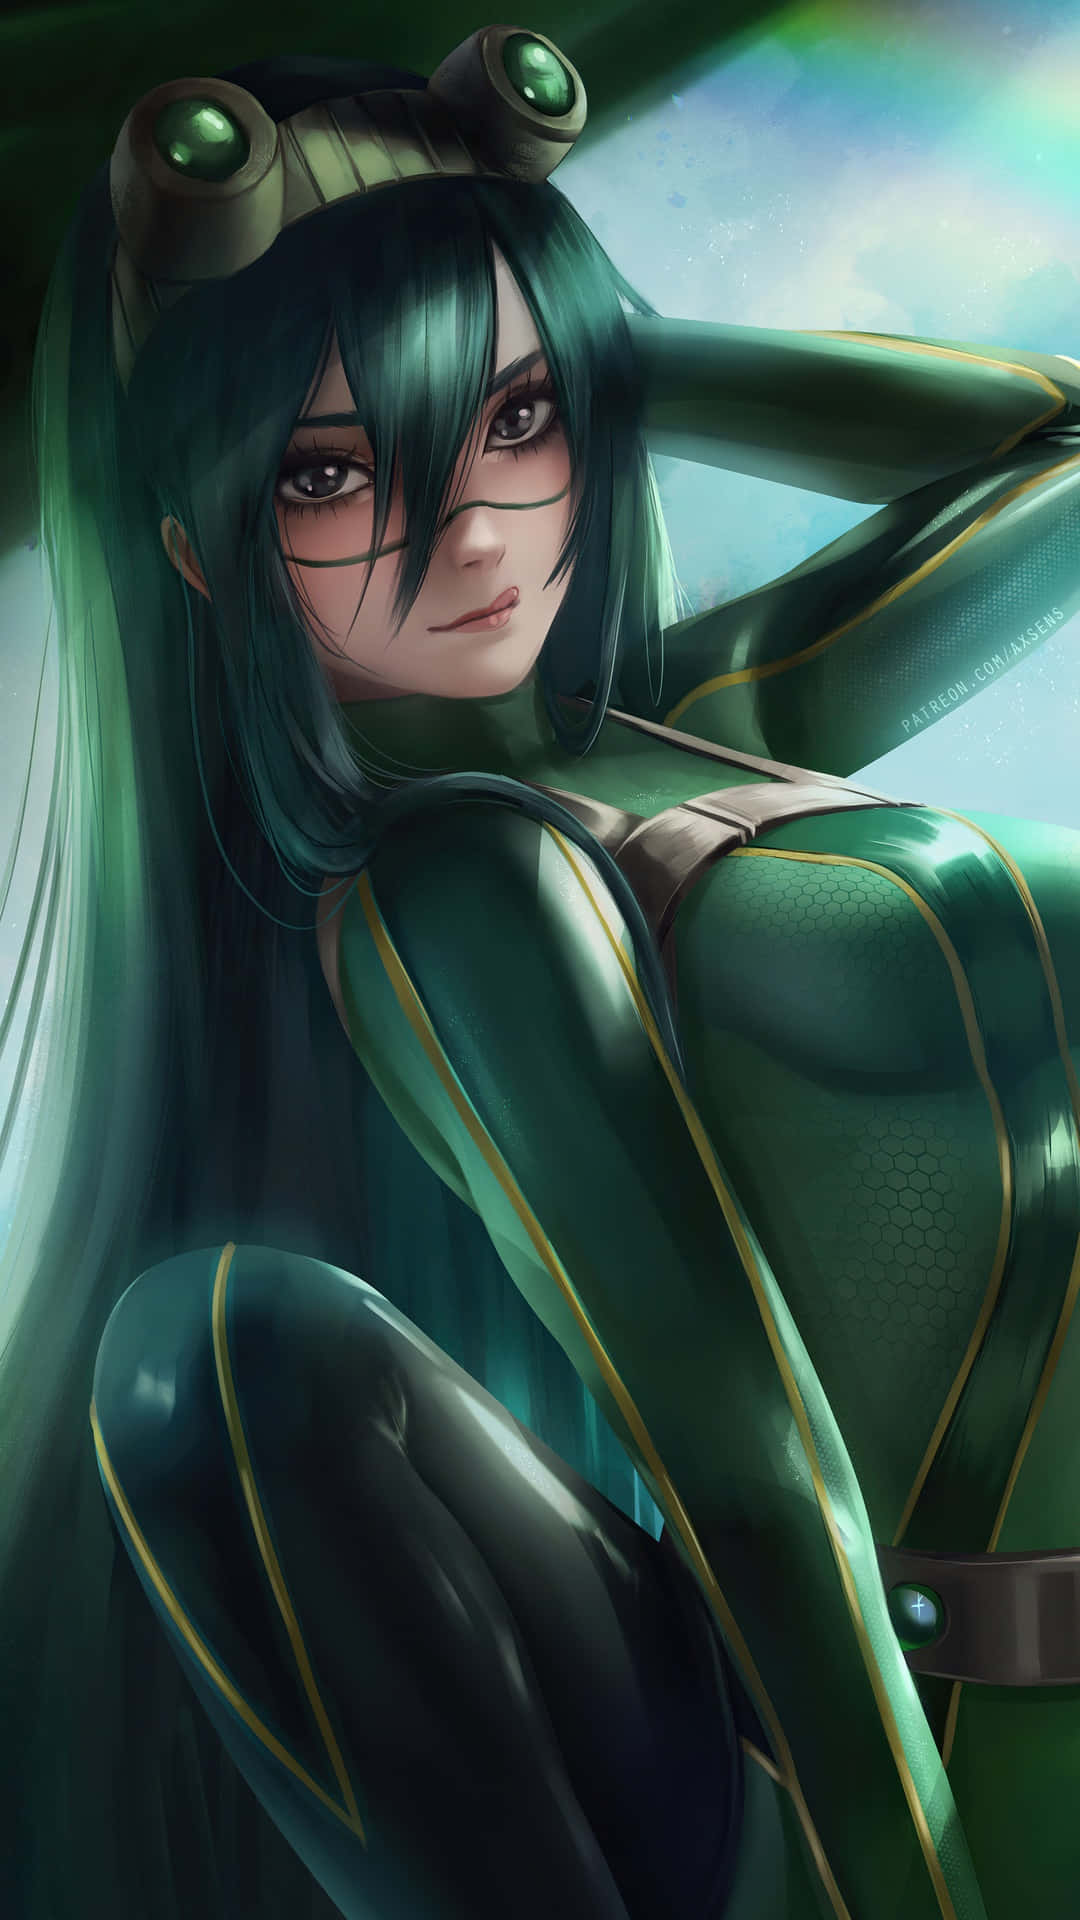 A Green Anime Girl With Long Hair Posing